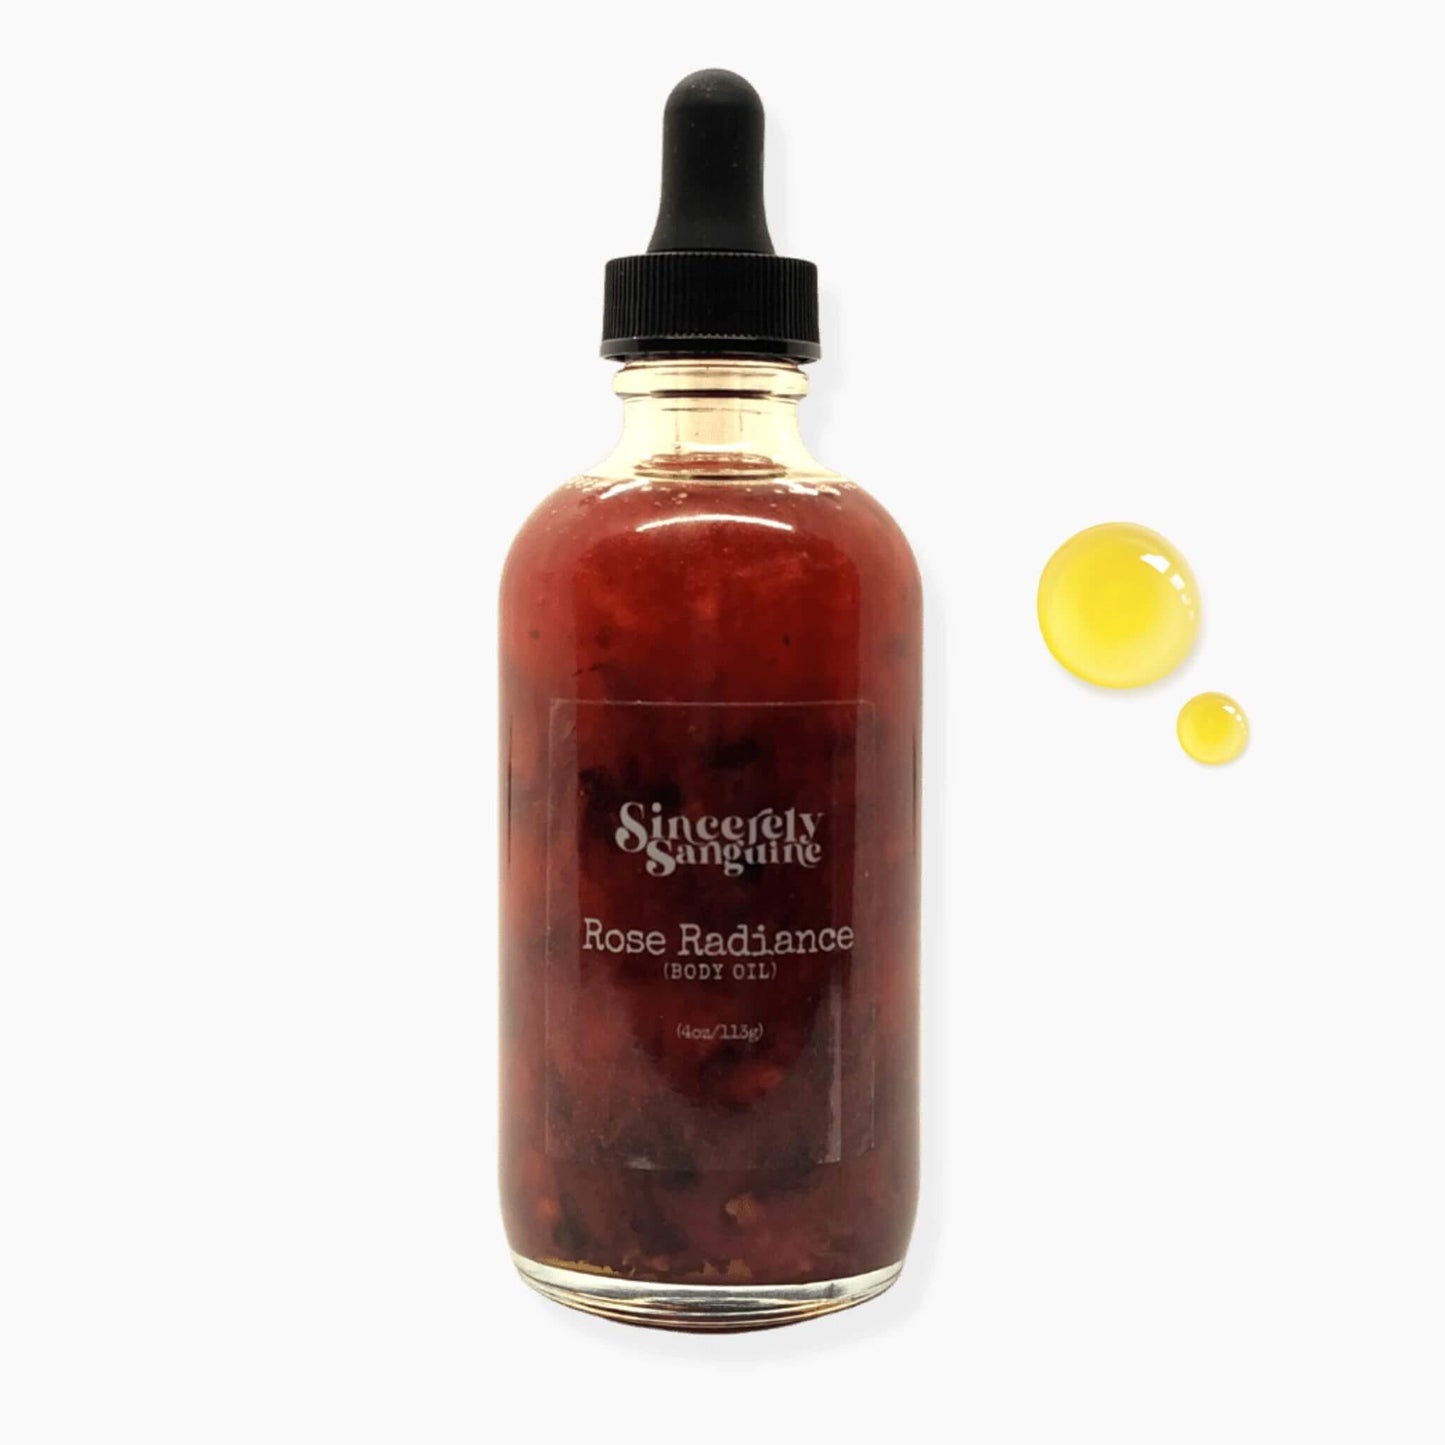 Rose Radiance (Body Oil + Bath Oil) - Sincerely Sanguine